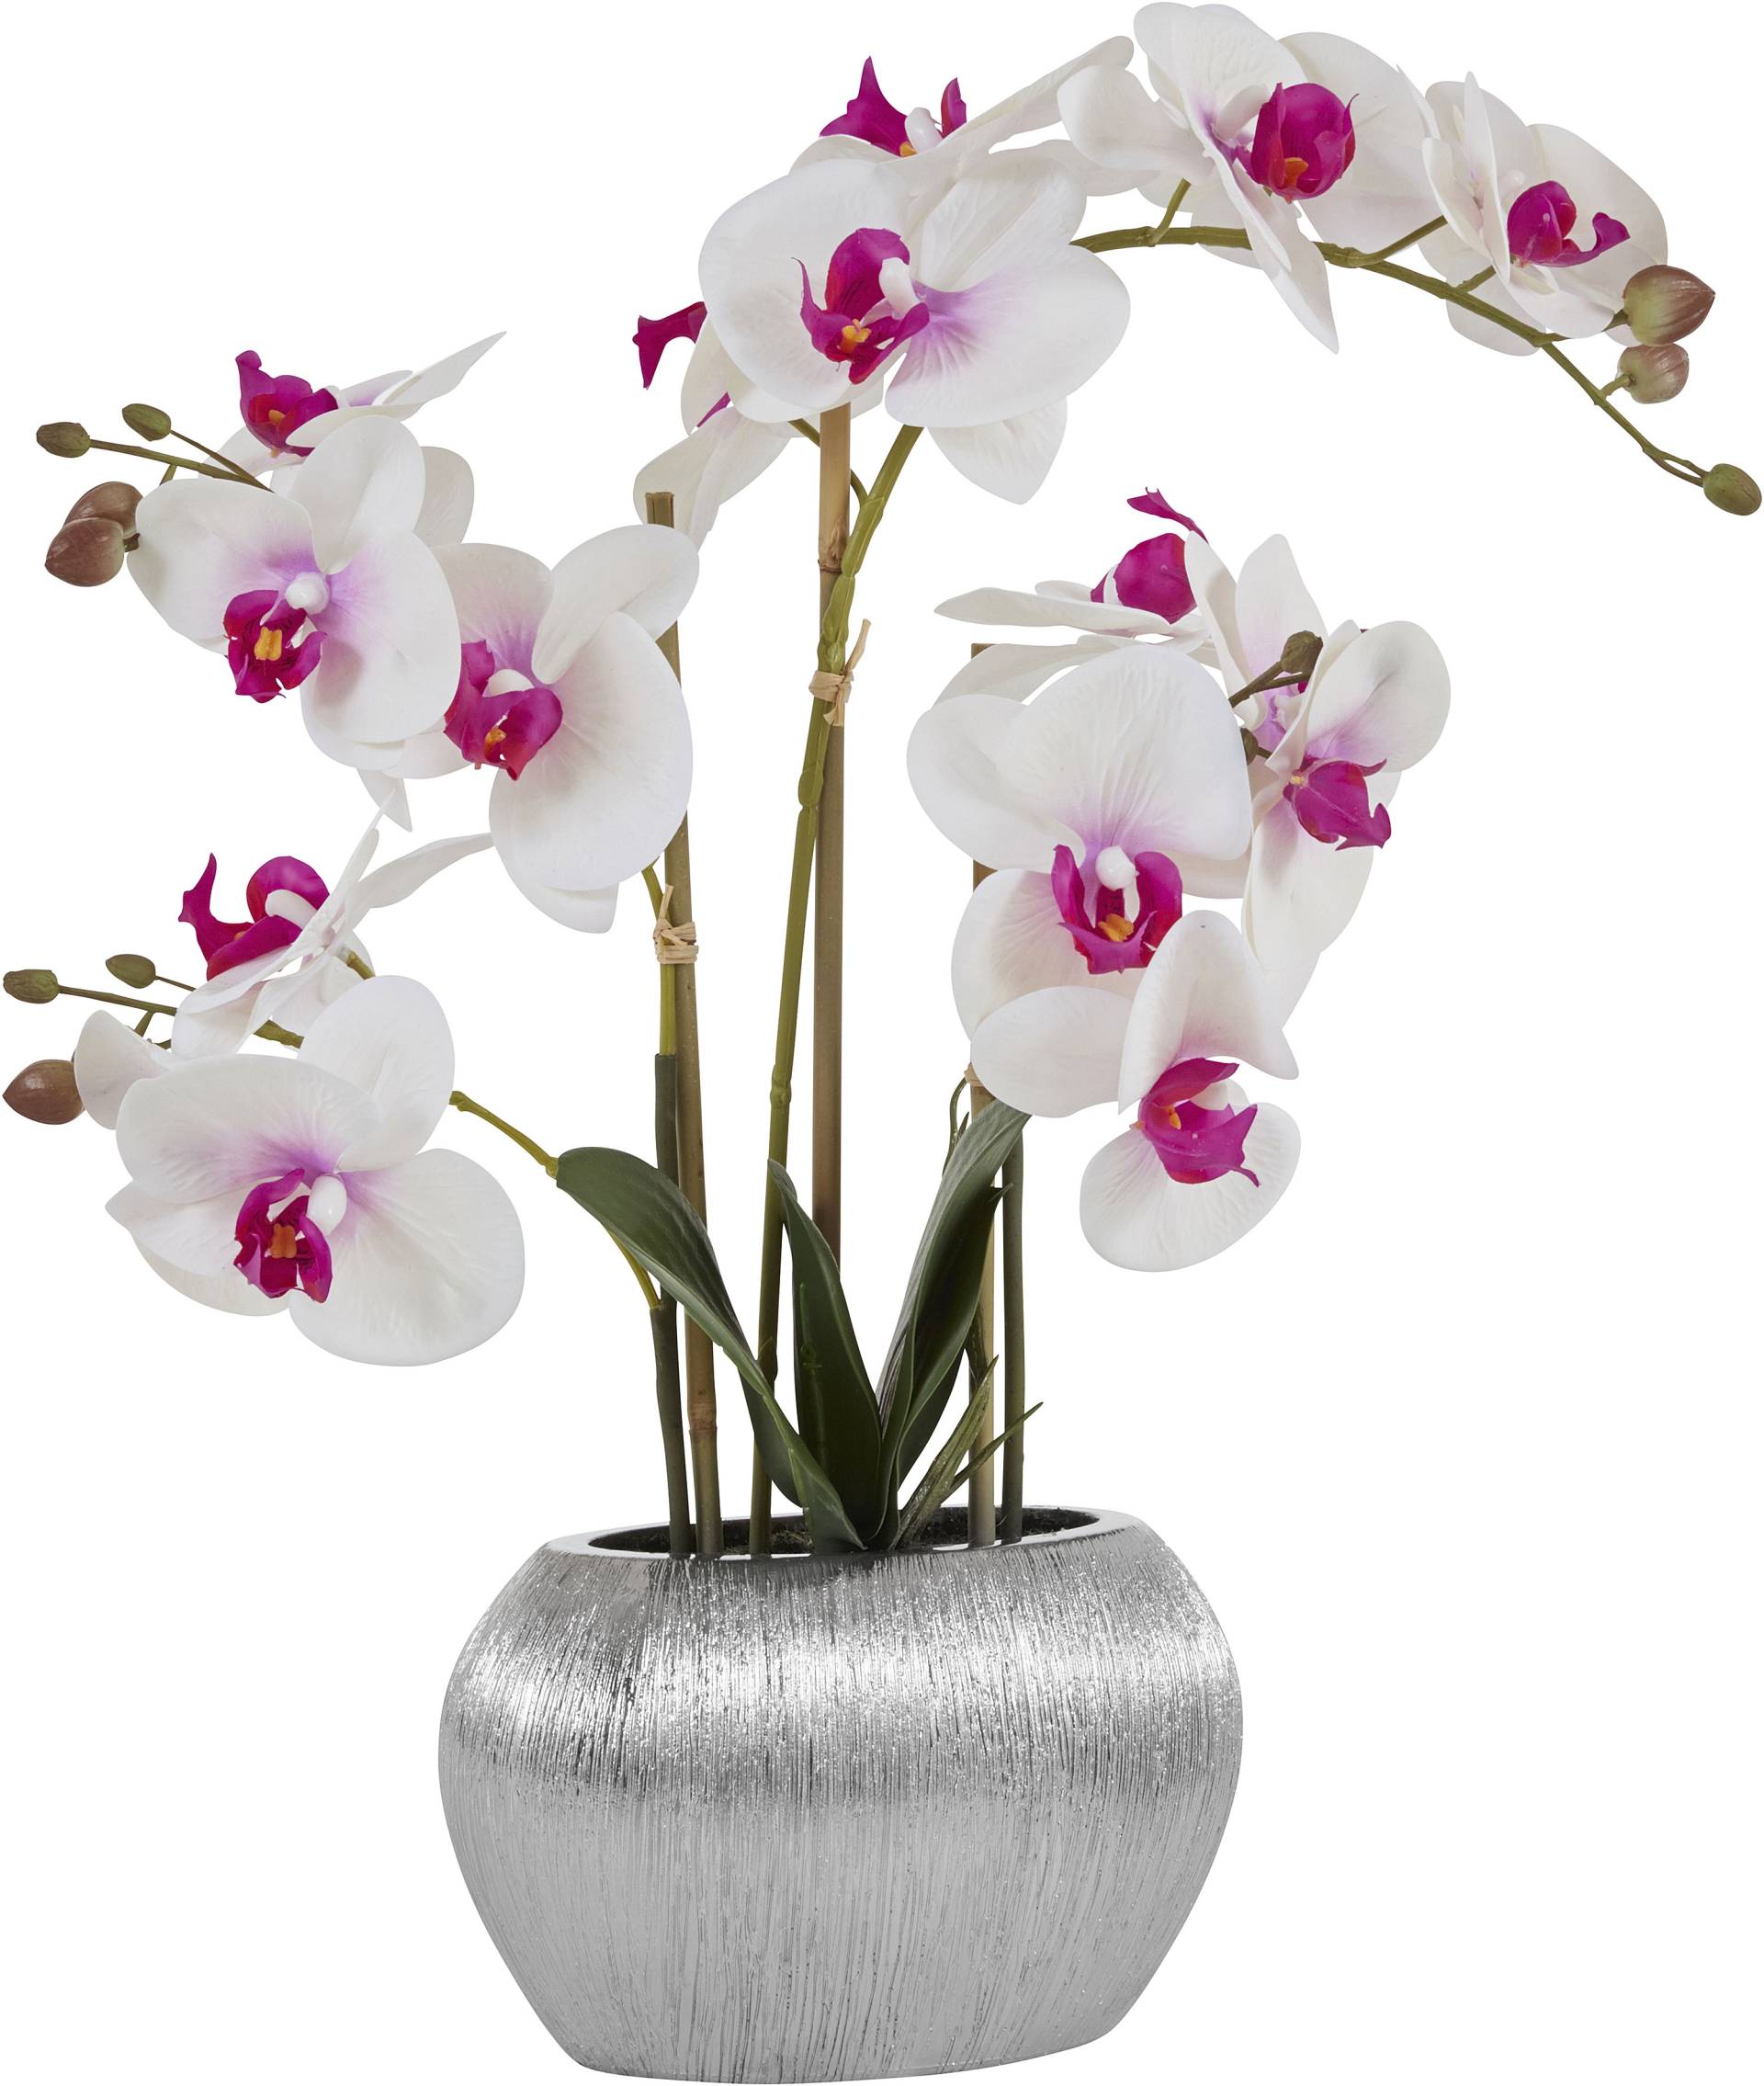 Home affaire Kunstpflanze »Orchidee« von home affaire